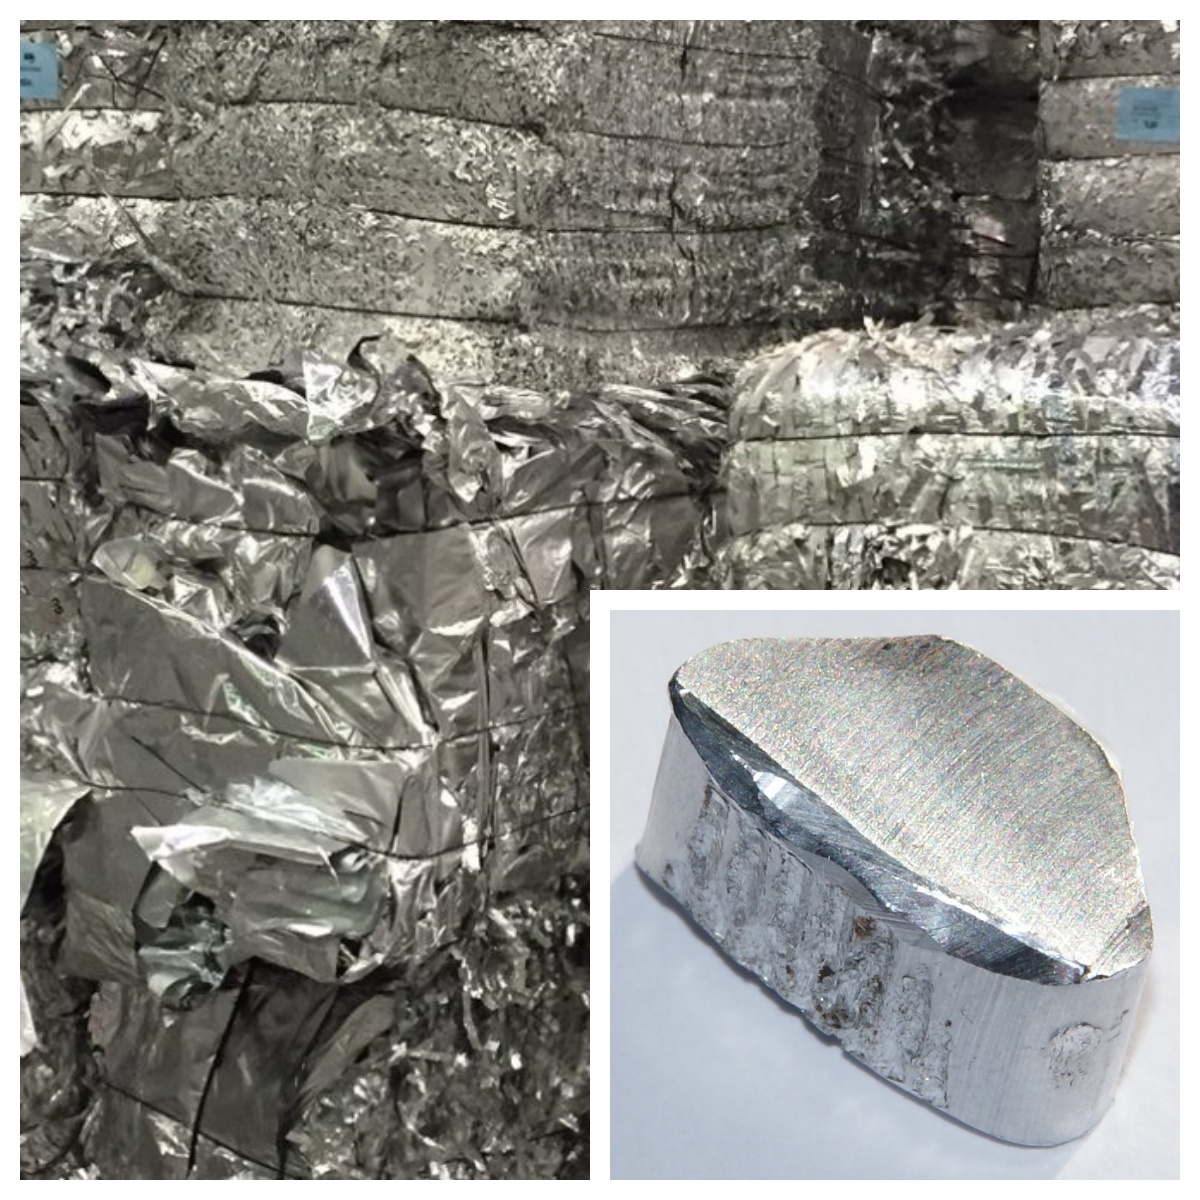 Aluminio reciclado versus aluminio puro